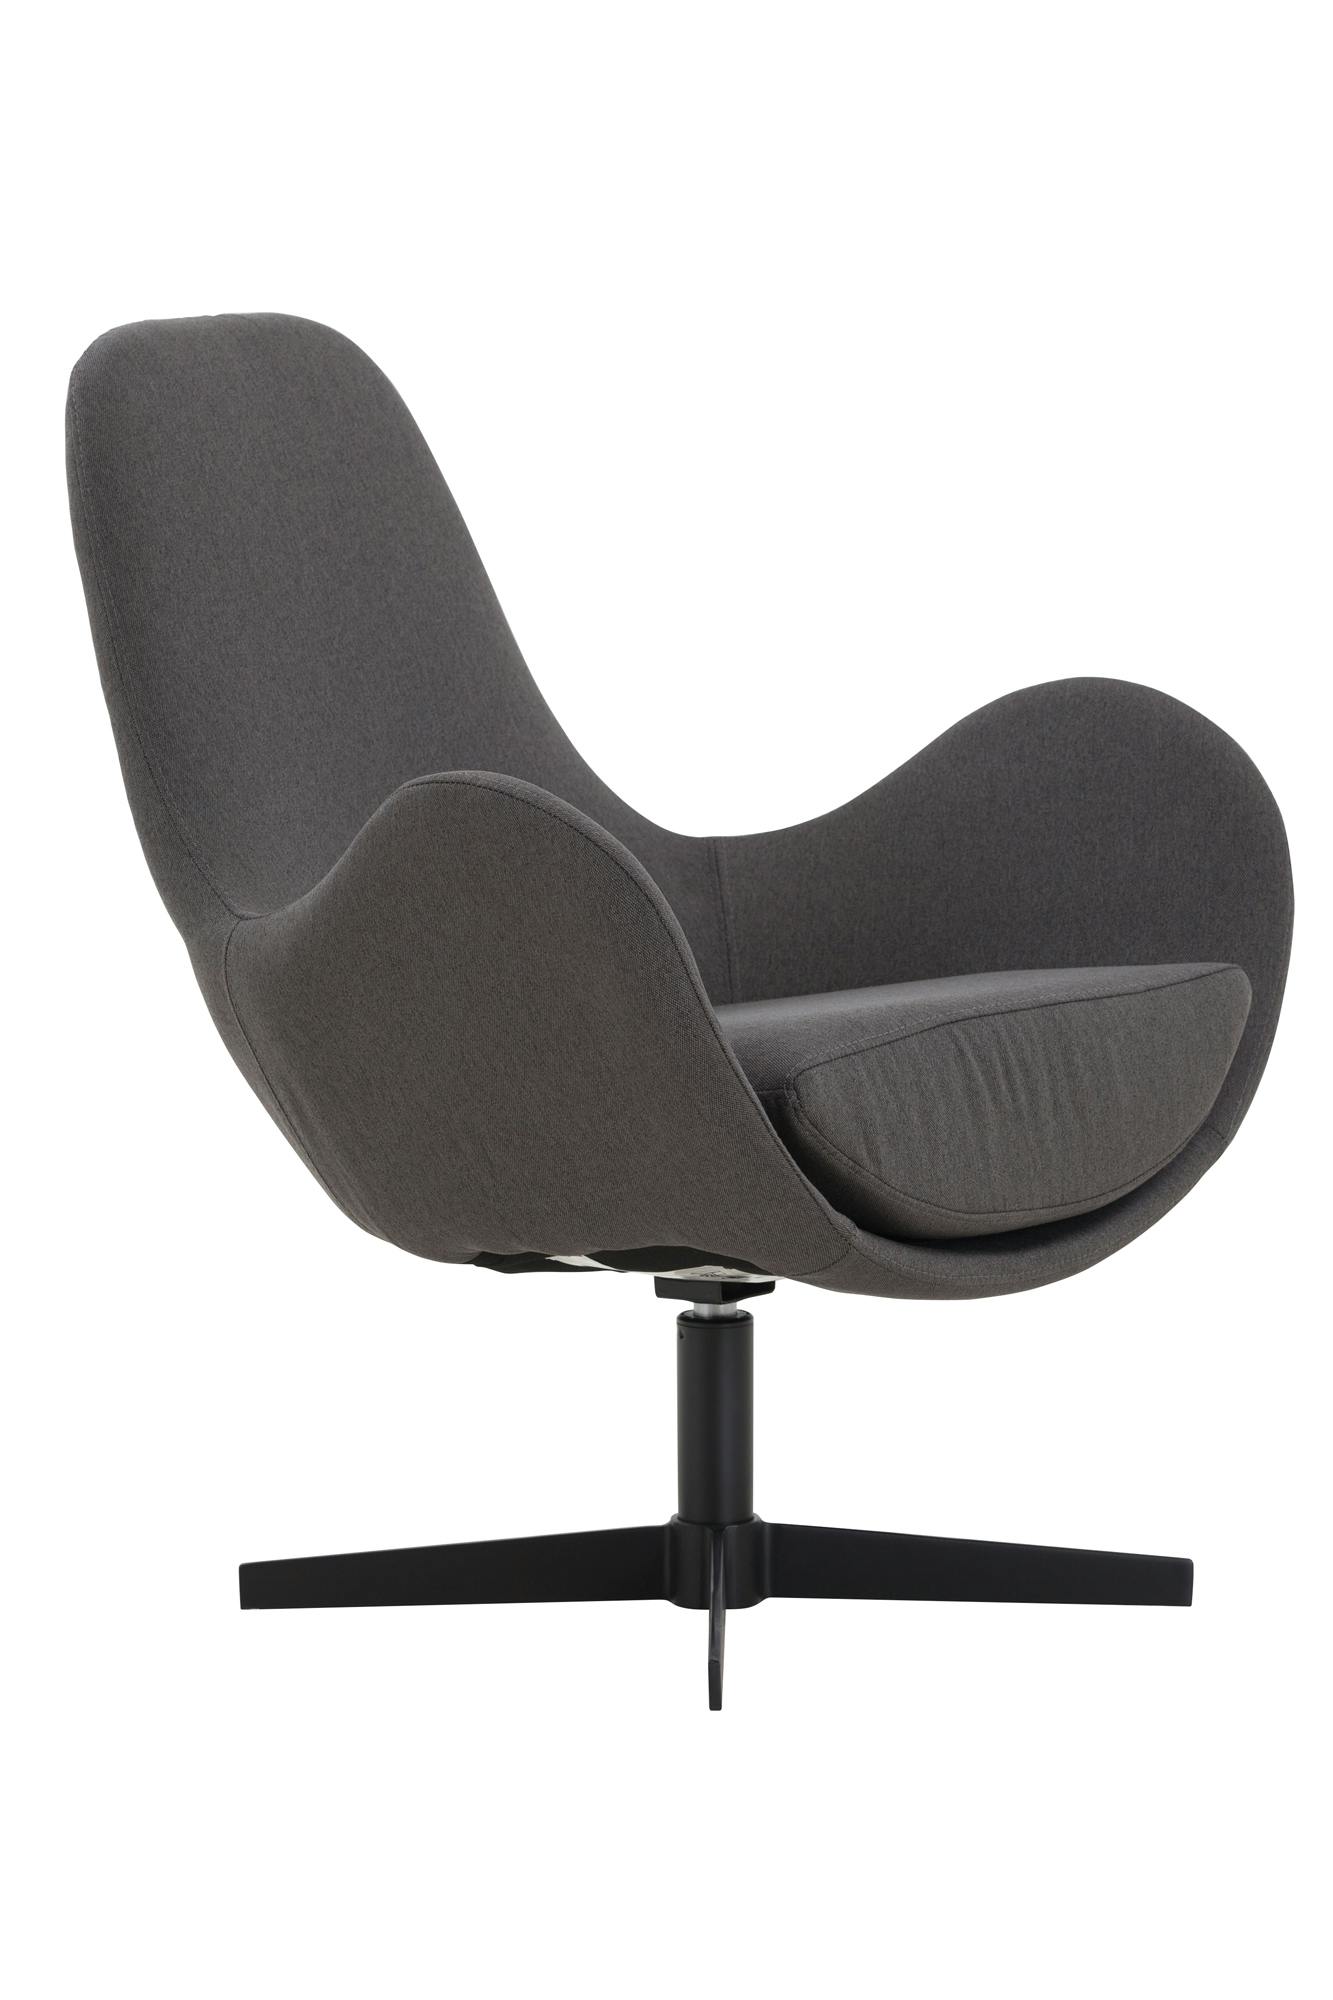 SalesFever Polster-Sessel | mit | Textil 69 T H Metall | dunkelgrau-schwarz | METRO Marktplatz 72 85 B x Drehfunktion cm | | x Bezug Gestell